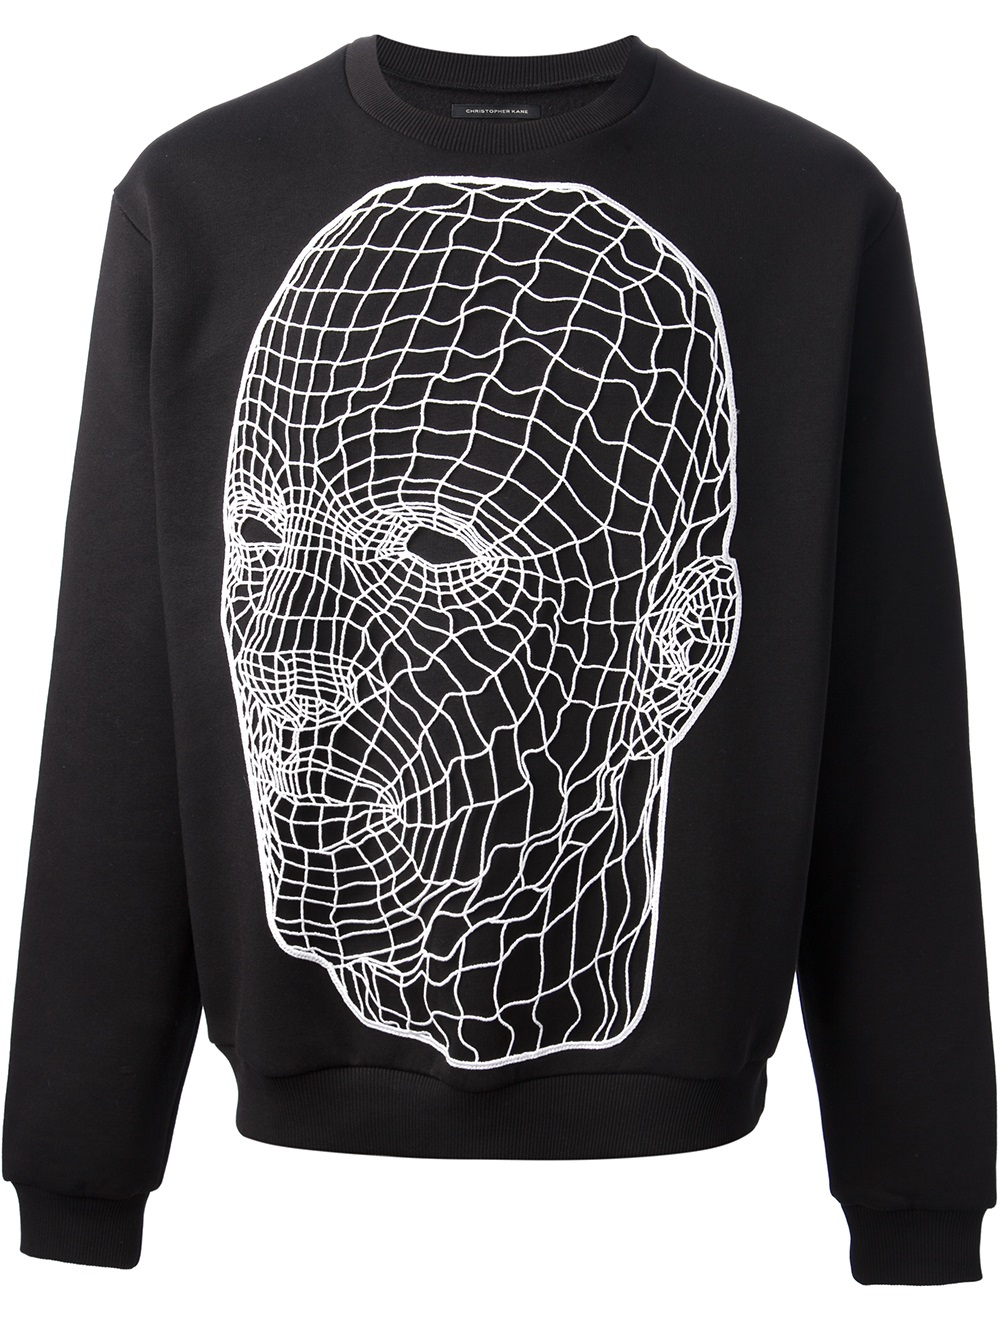 Lyst - Christopher Kane Contour Map Print Sweatshirt in Black for Men